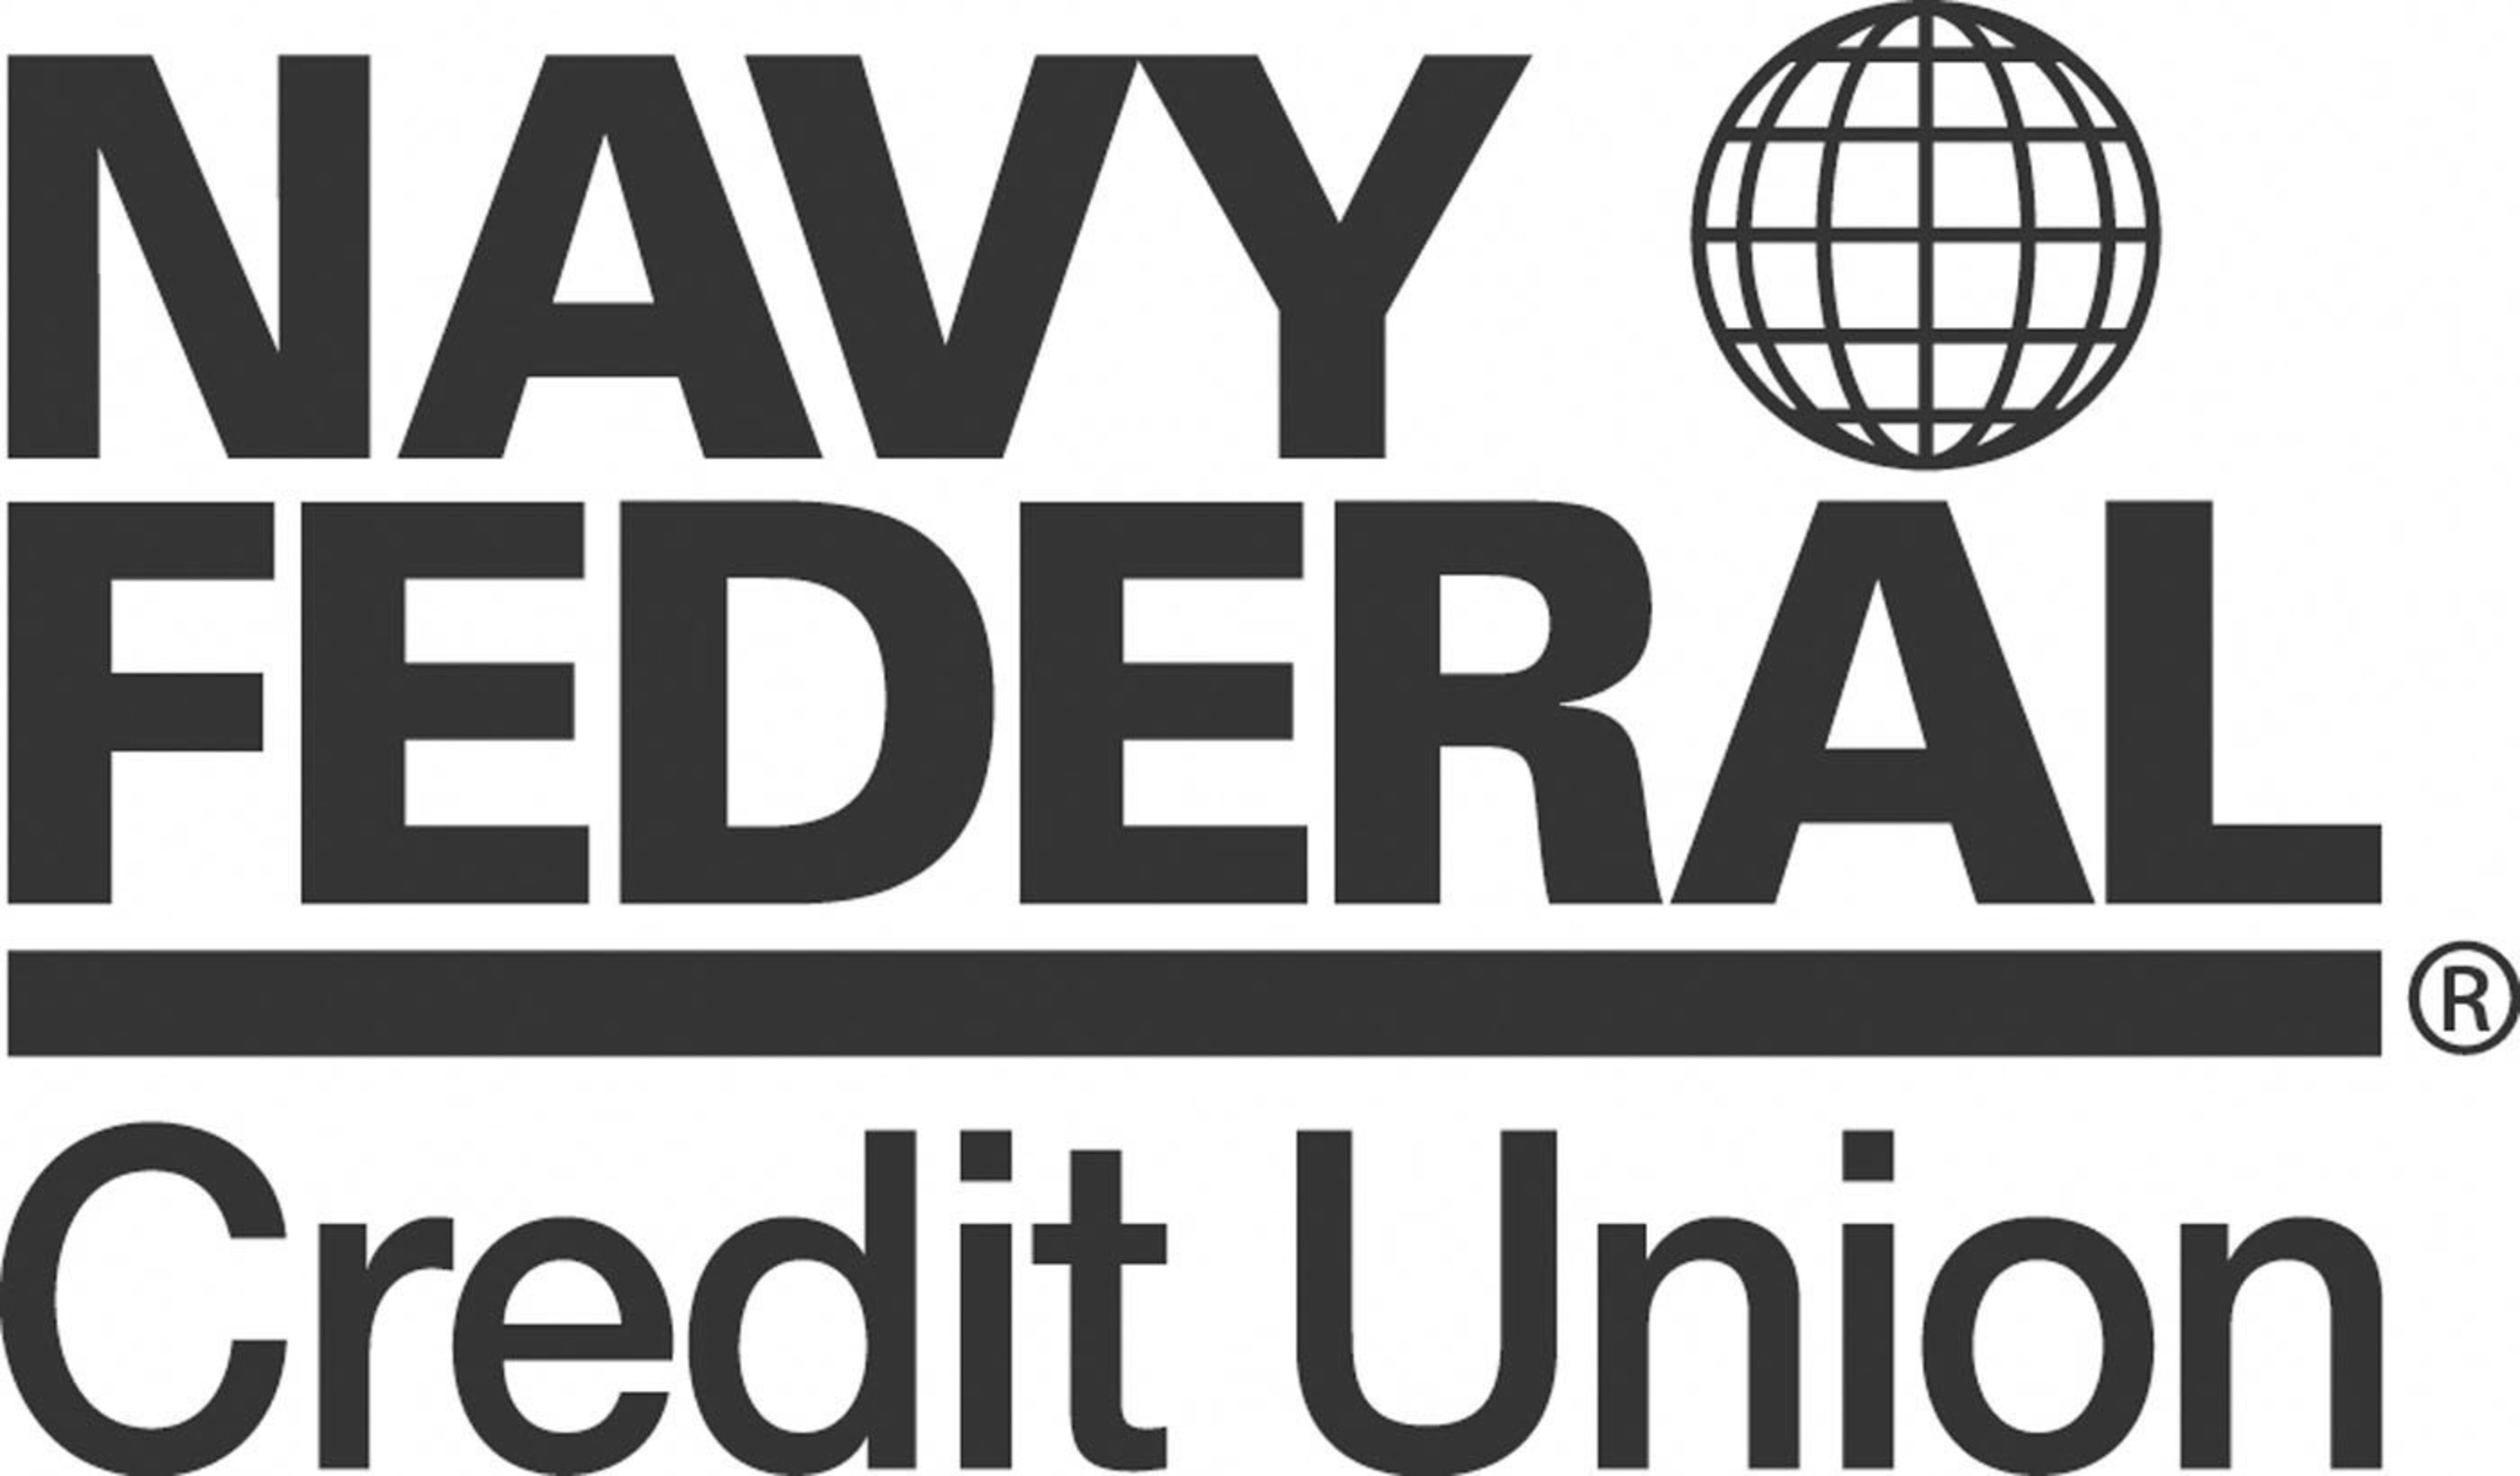 Navy Federal Credit Union Logo. (PRNewsFoto/Navy Federal Credit Union) (PRNewsFoto/)